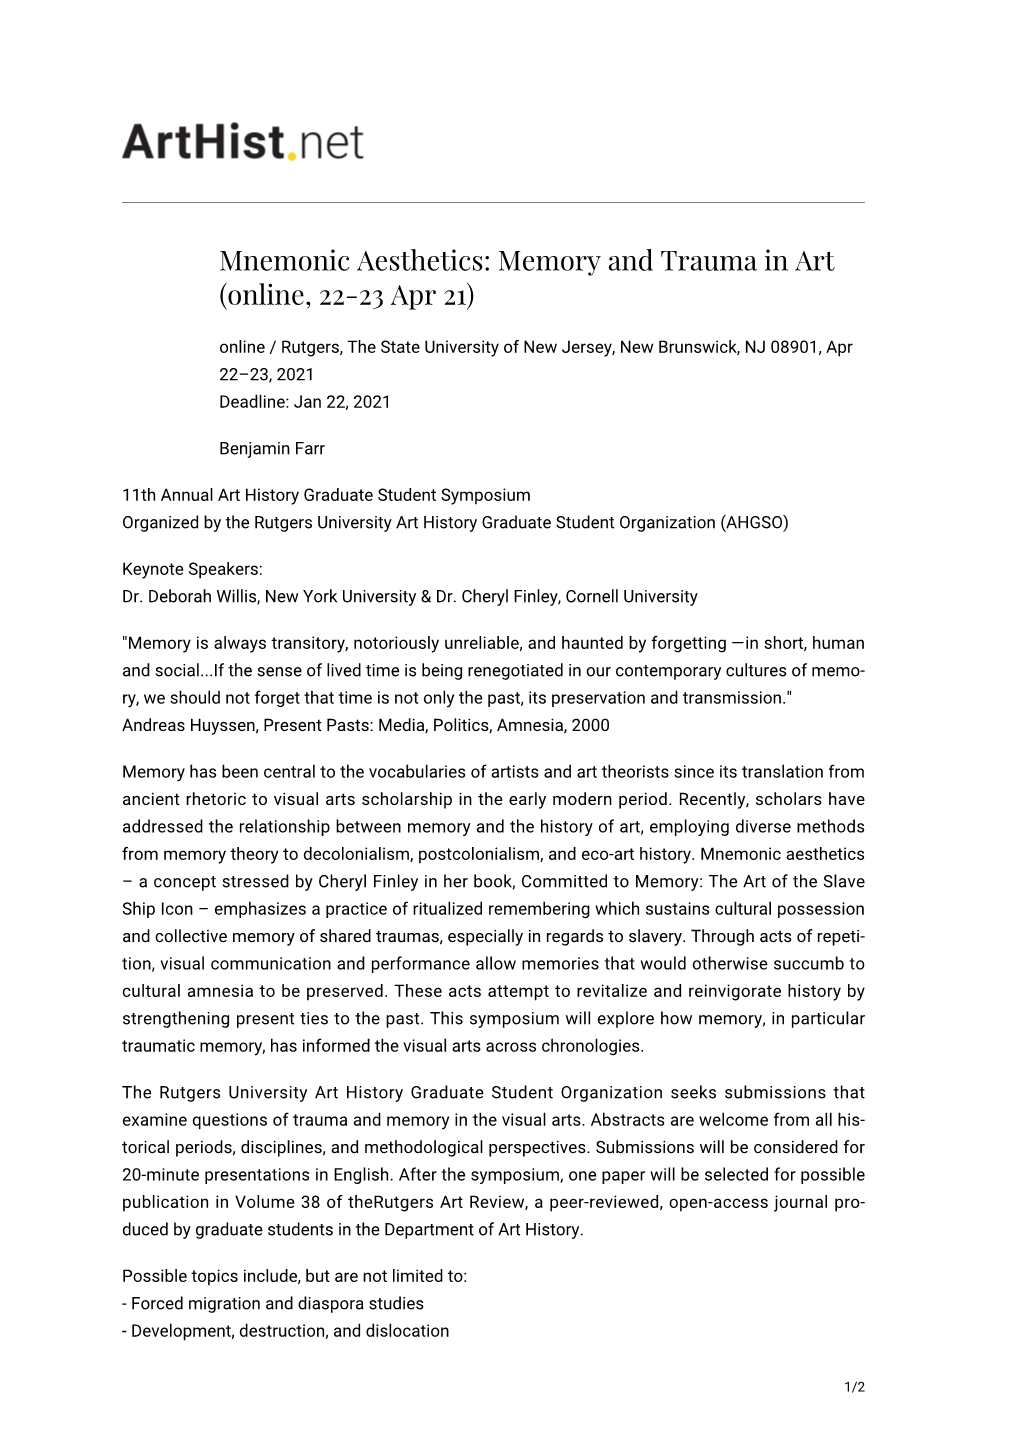 Mnemonic Aesthetics: Memory and Trauma in Art (Online, 22-23 Apr 21)